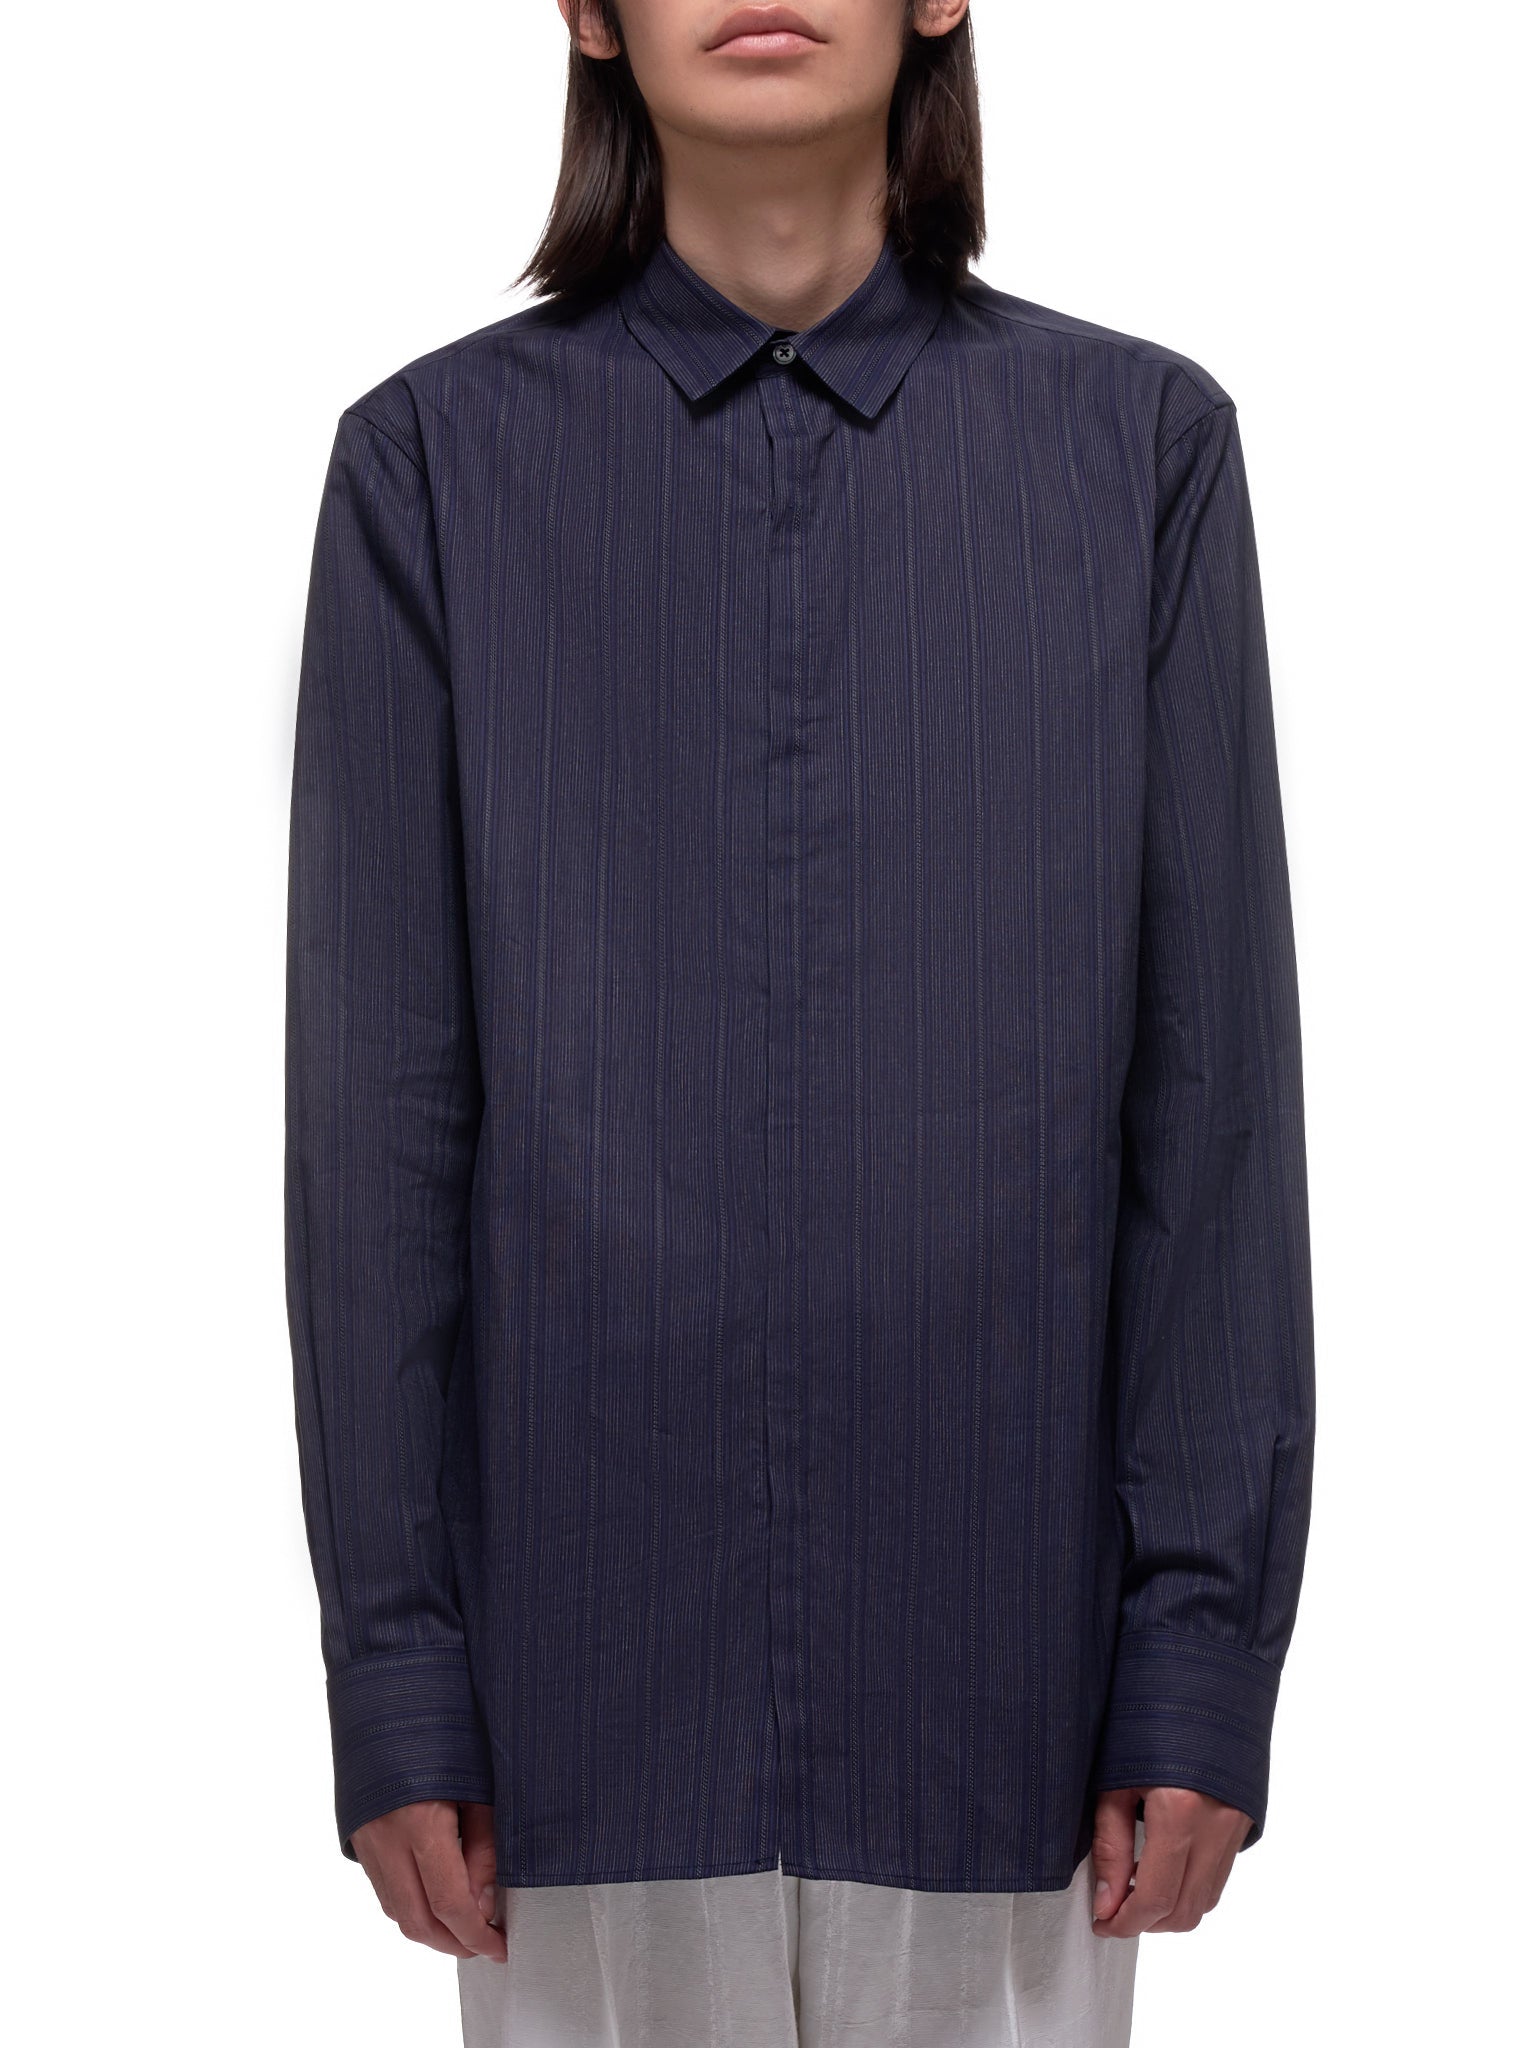 Layered Mixed Pinstripes Button Down Shirt (2007-3600-163-059-BLACK)